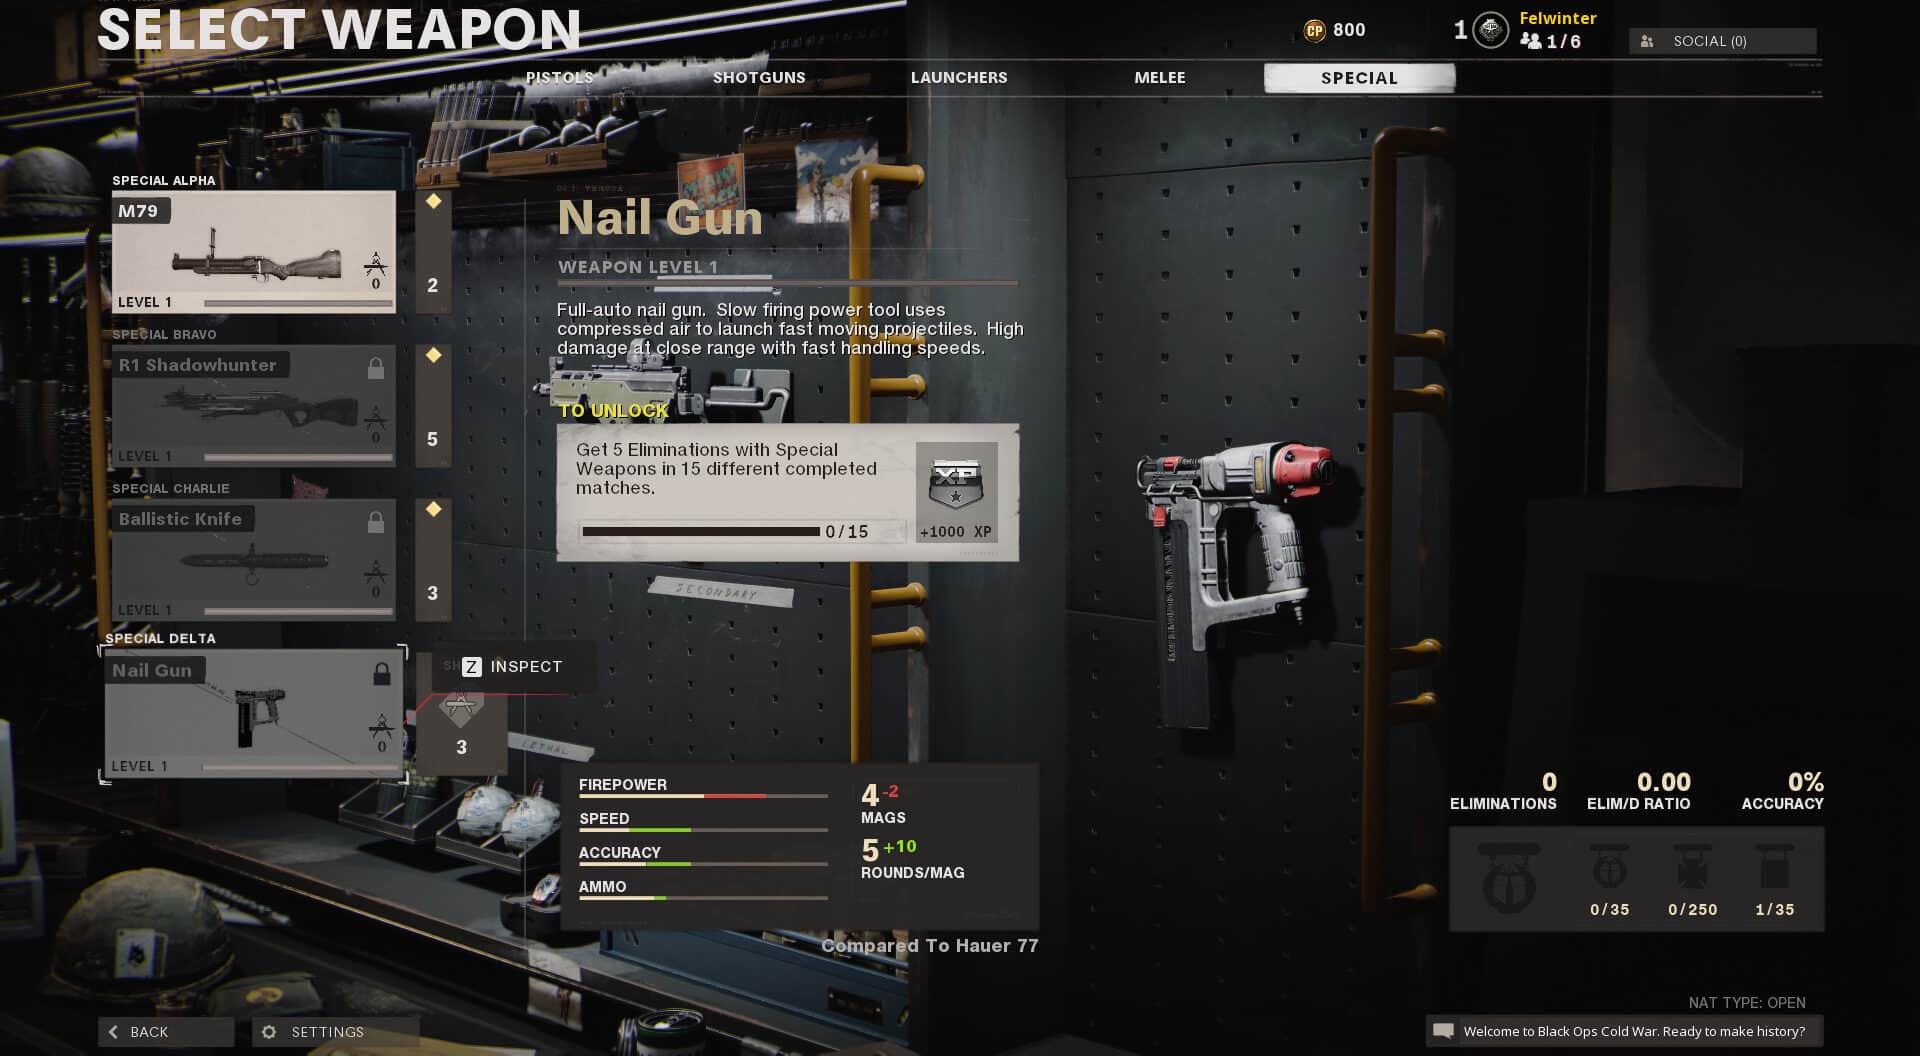 Nail Gun preview in Cold War gunsmith